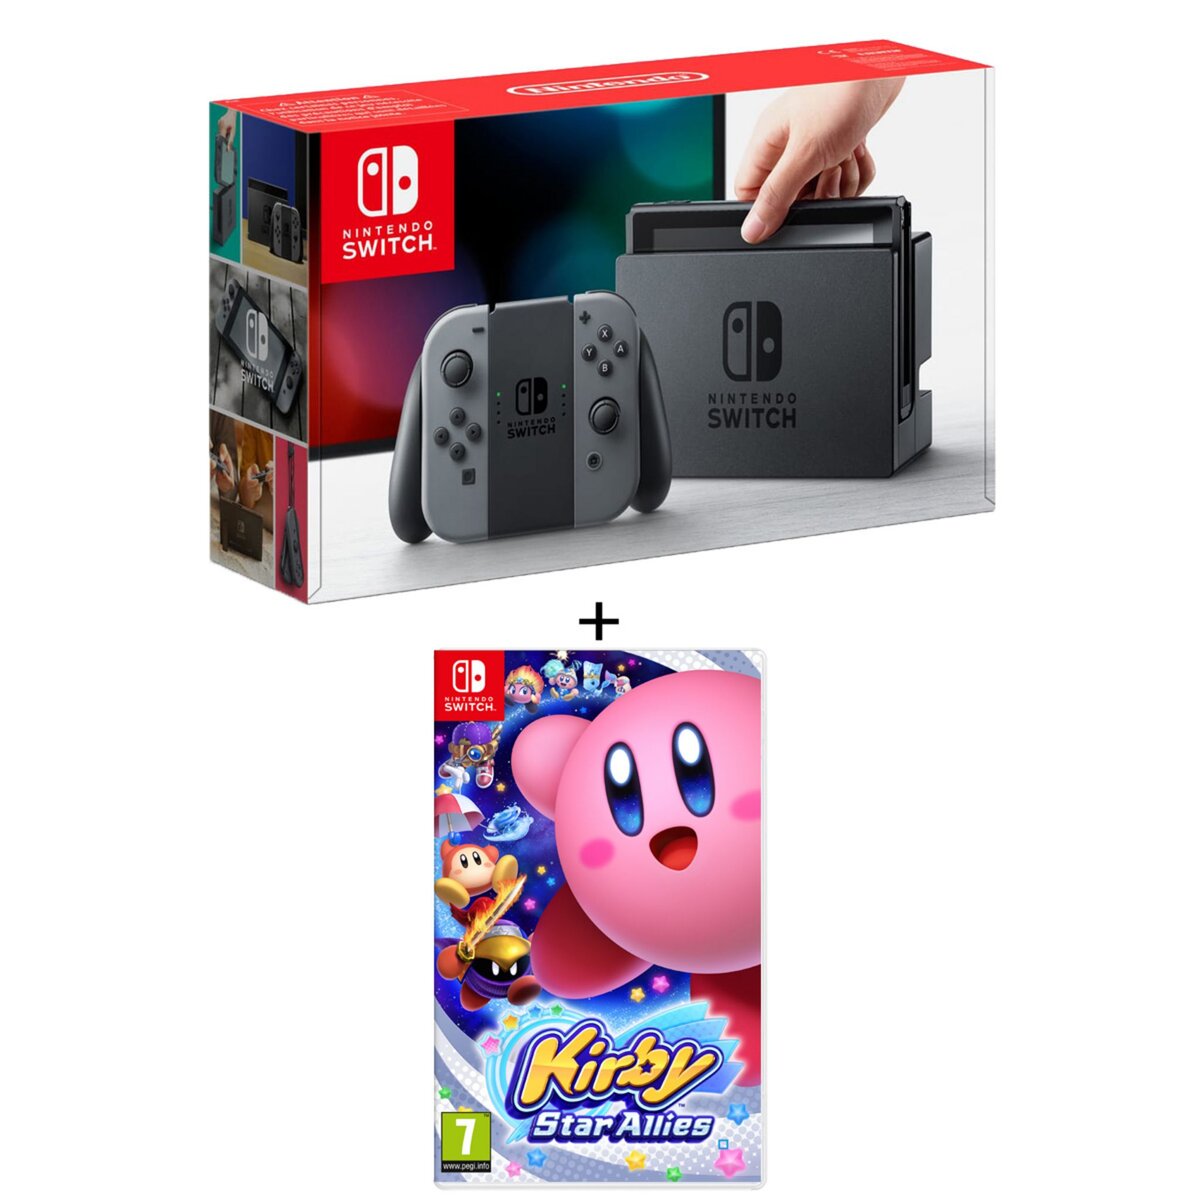 EXCLU WEB Console Nintendo switch 2 Joy-Con Grise + Kirby Star Allies